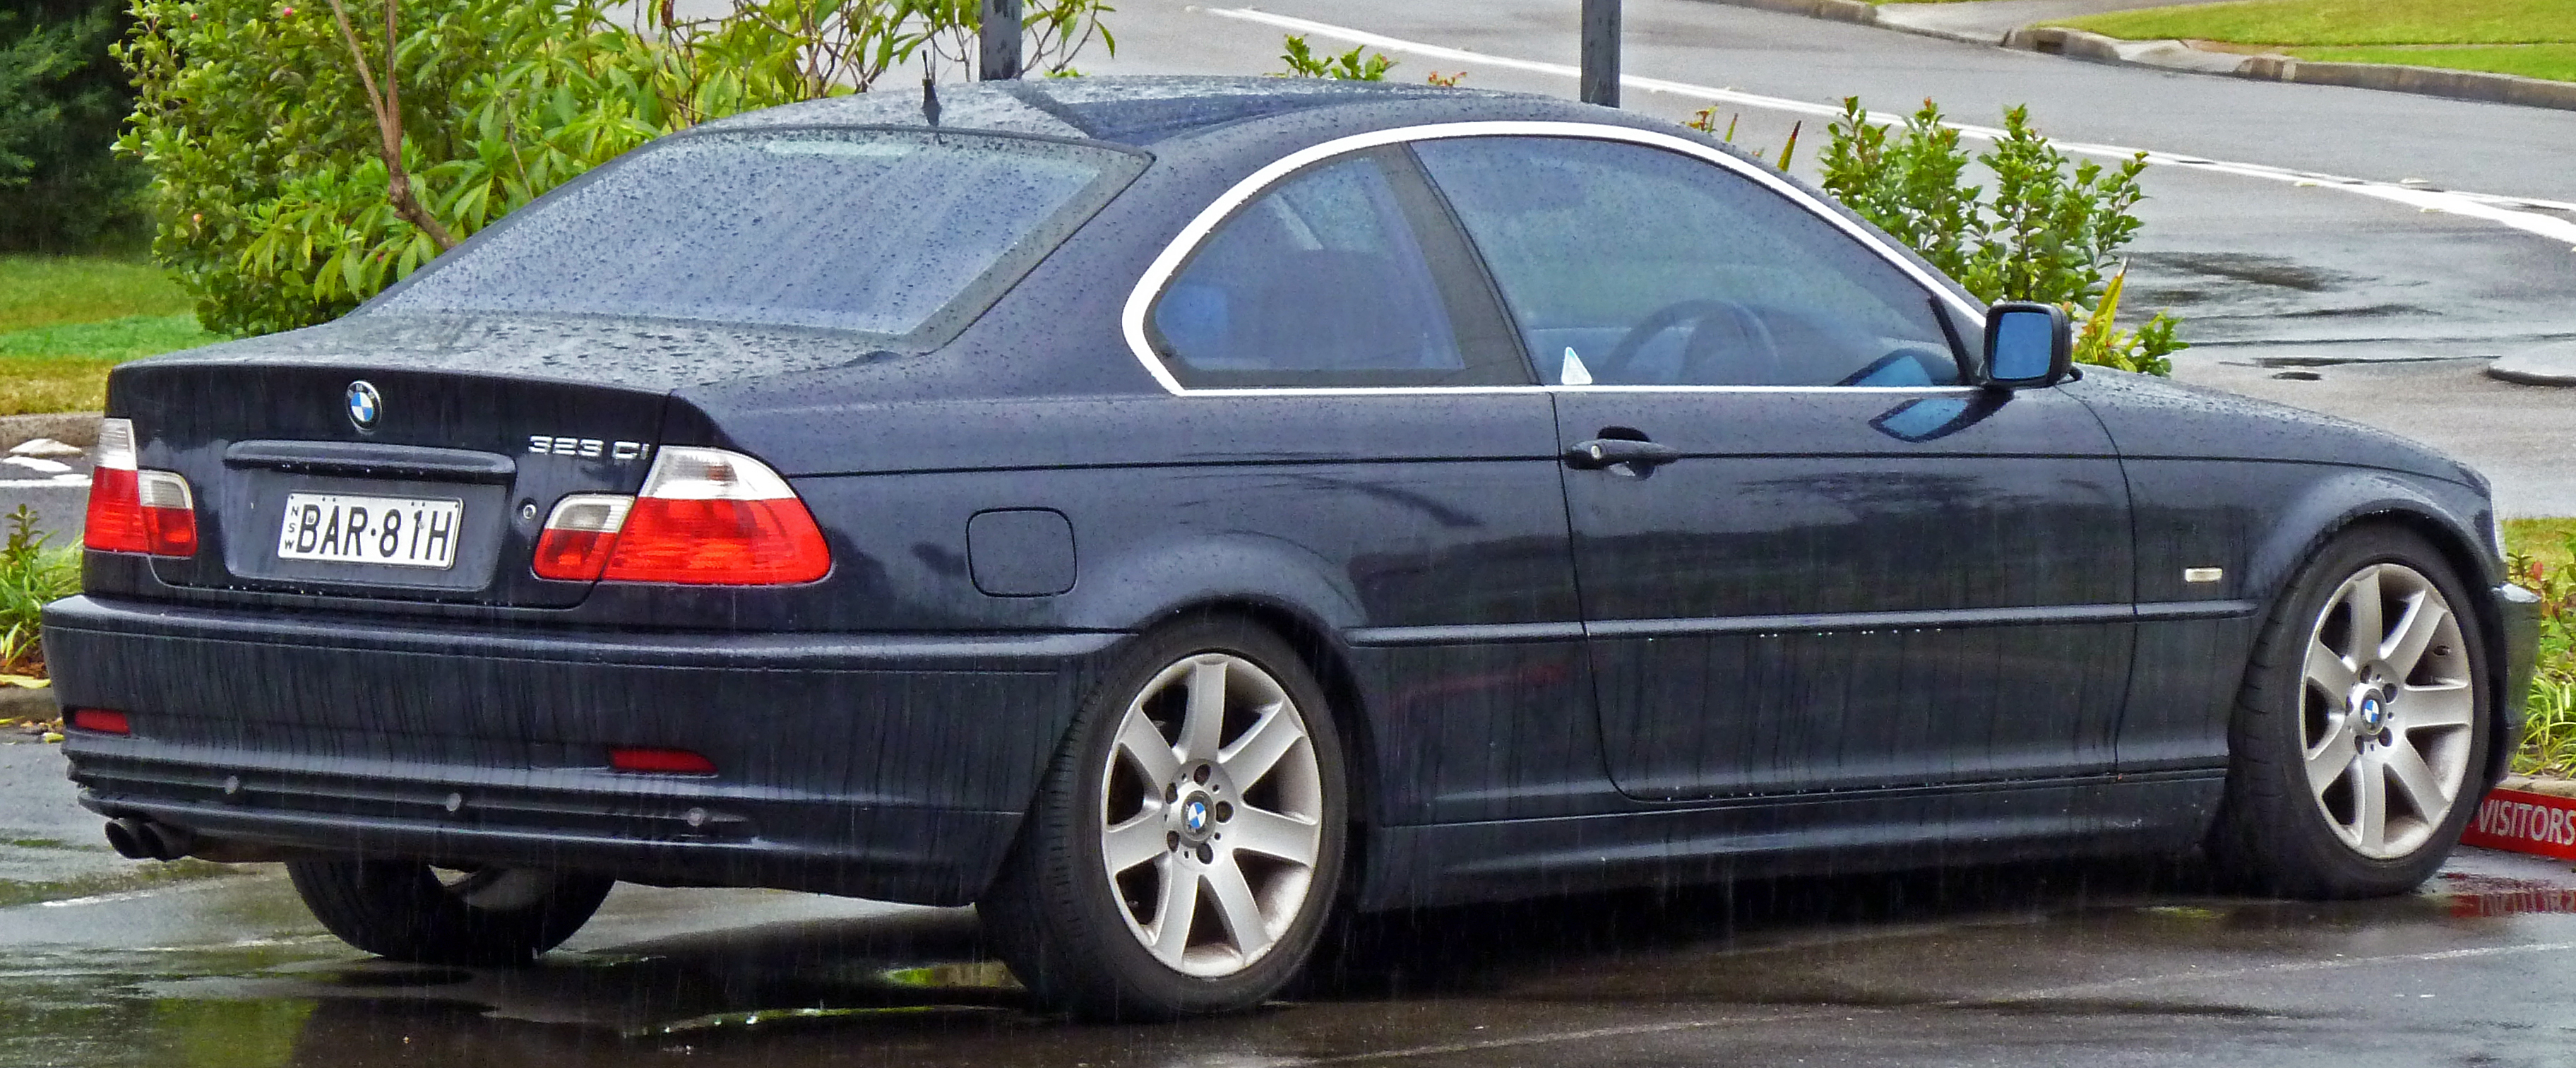 File:1999-2000 BMW 323Ci (E46) coupe 01.jpg